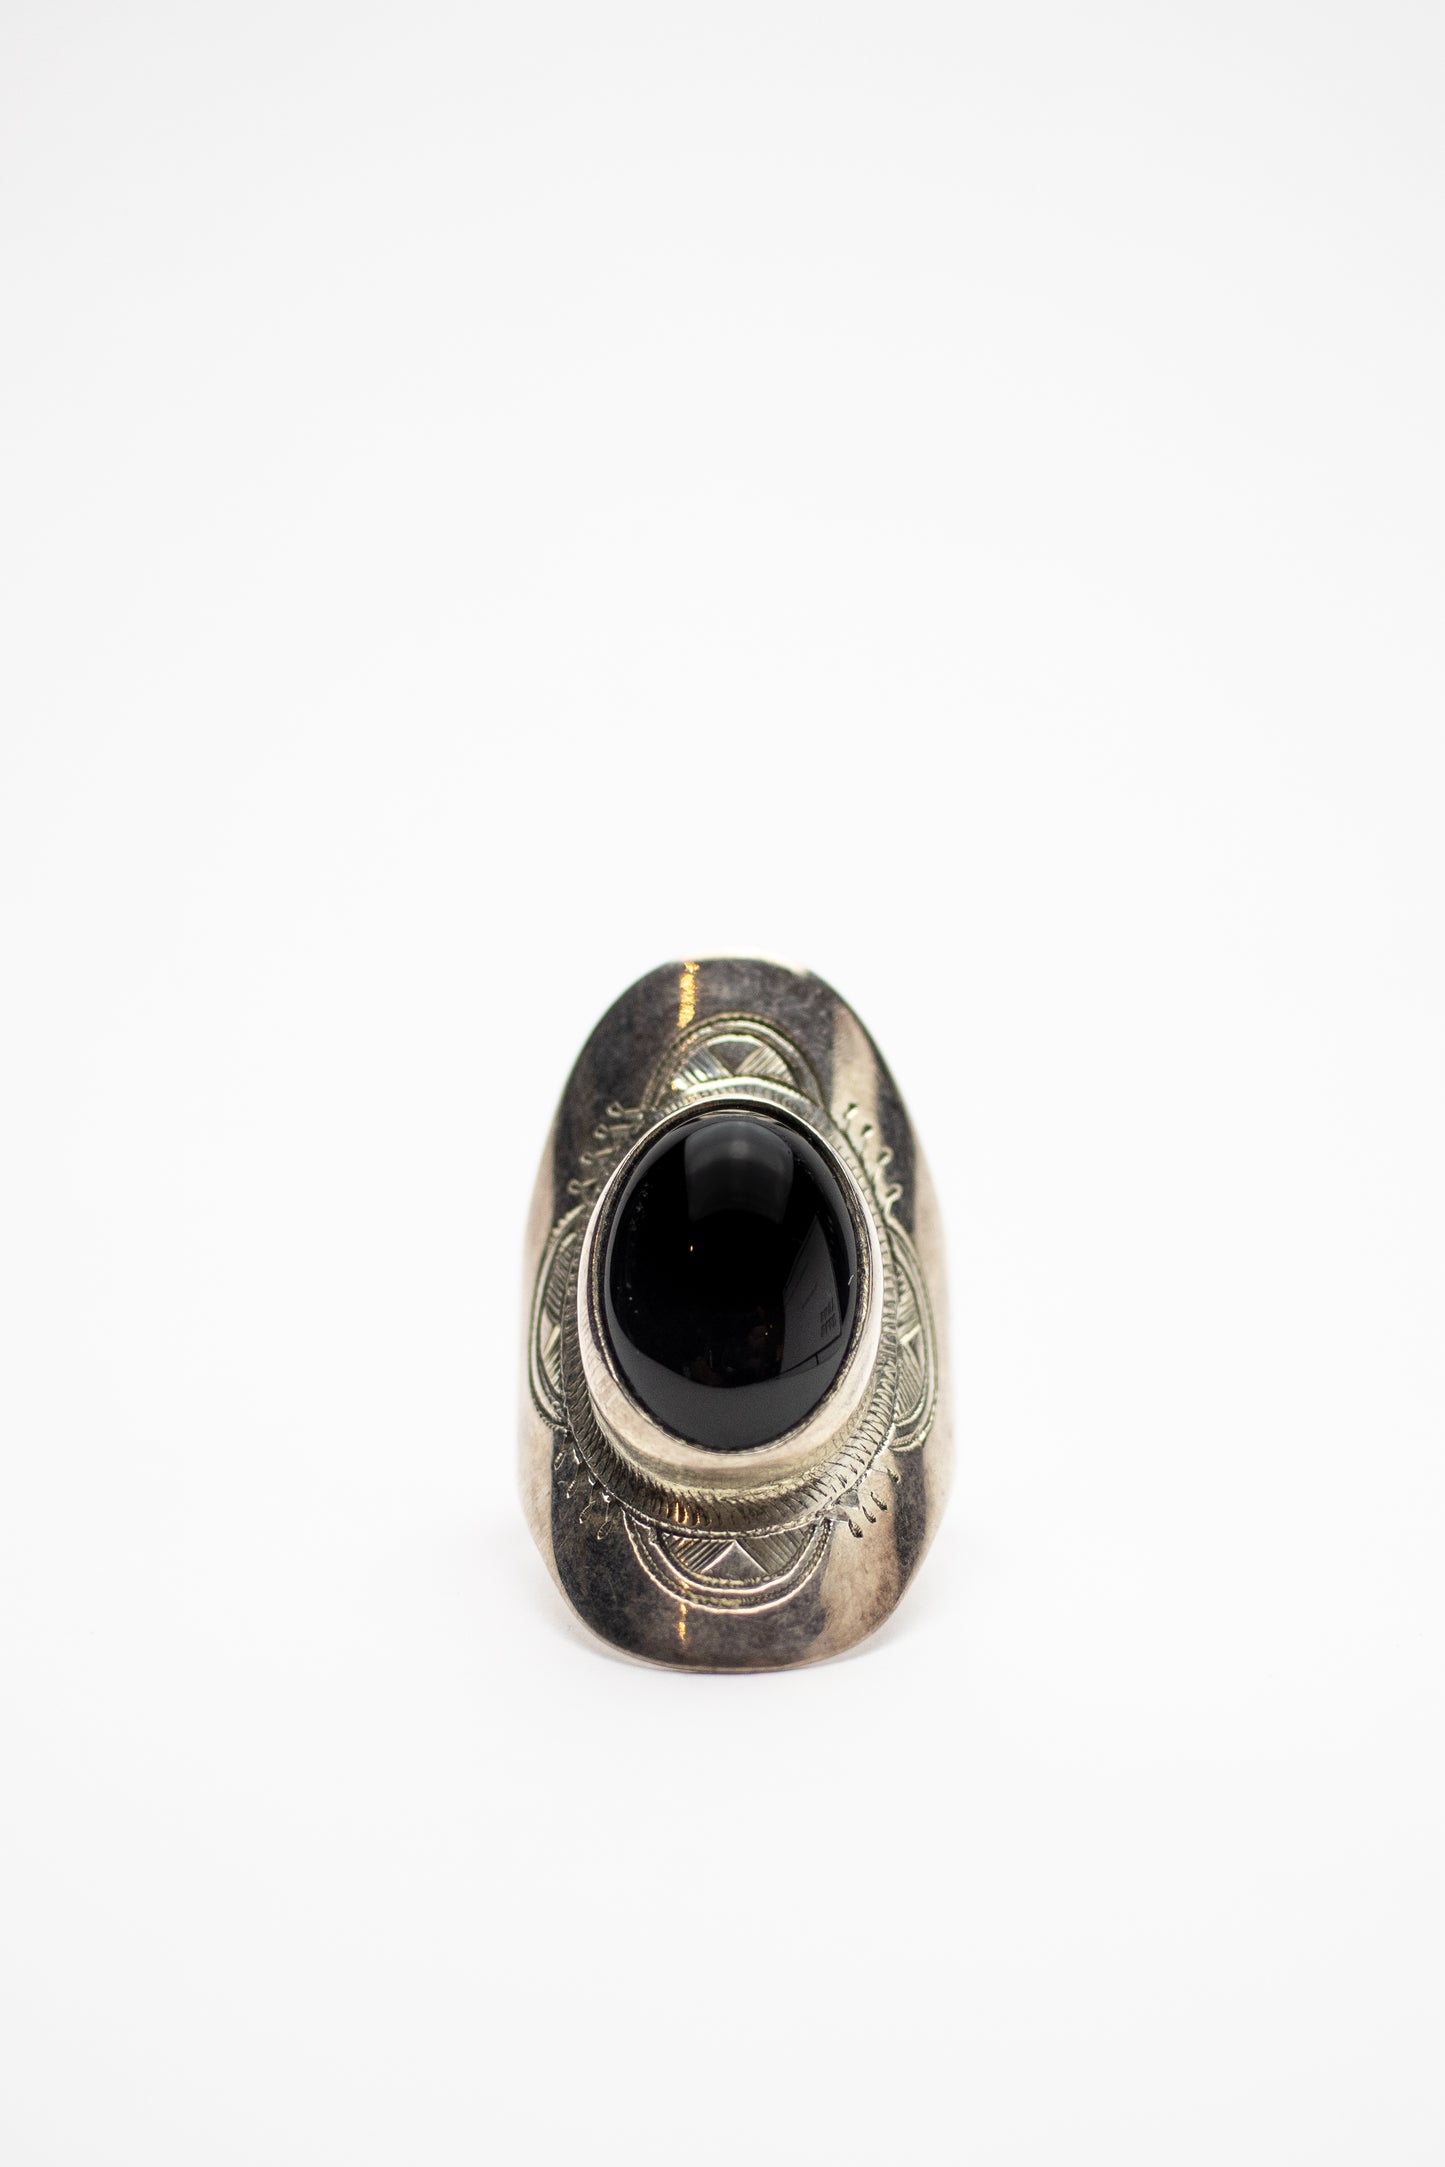 Touareg Silver Ring - Black Onyx - Size 62